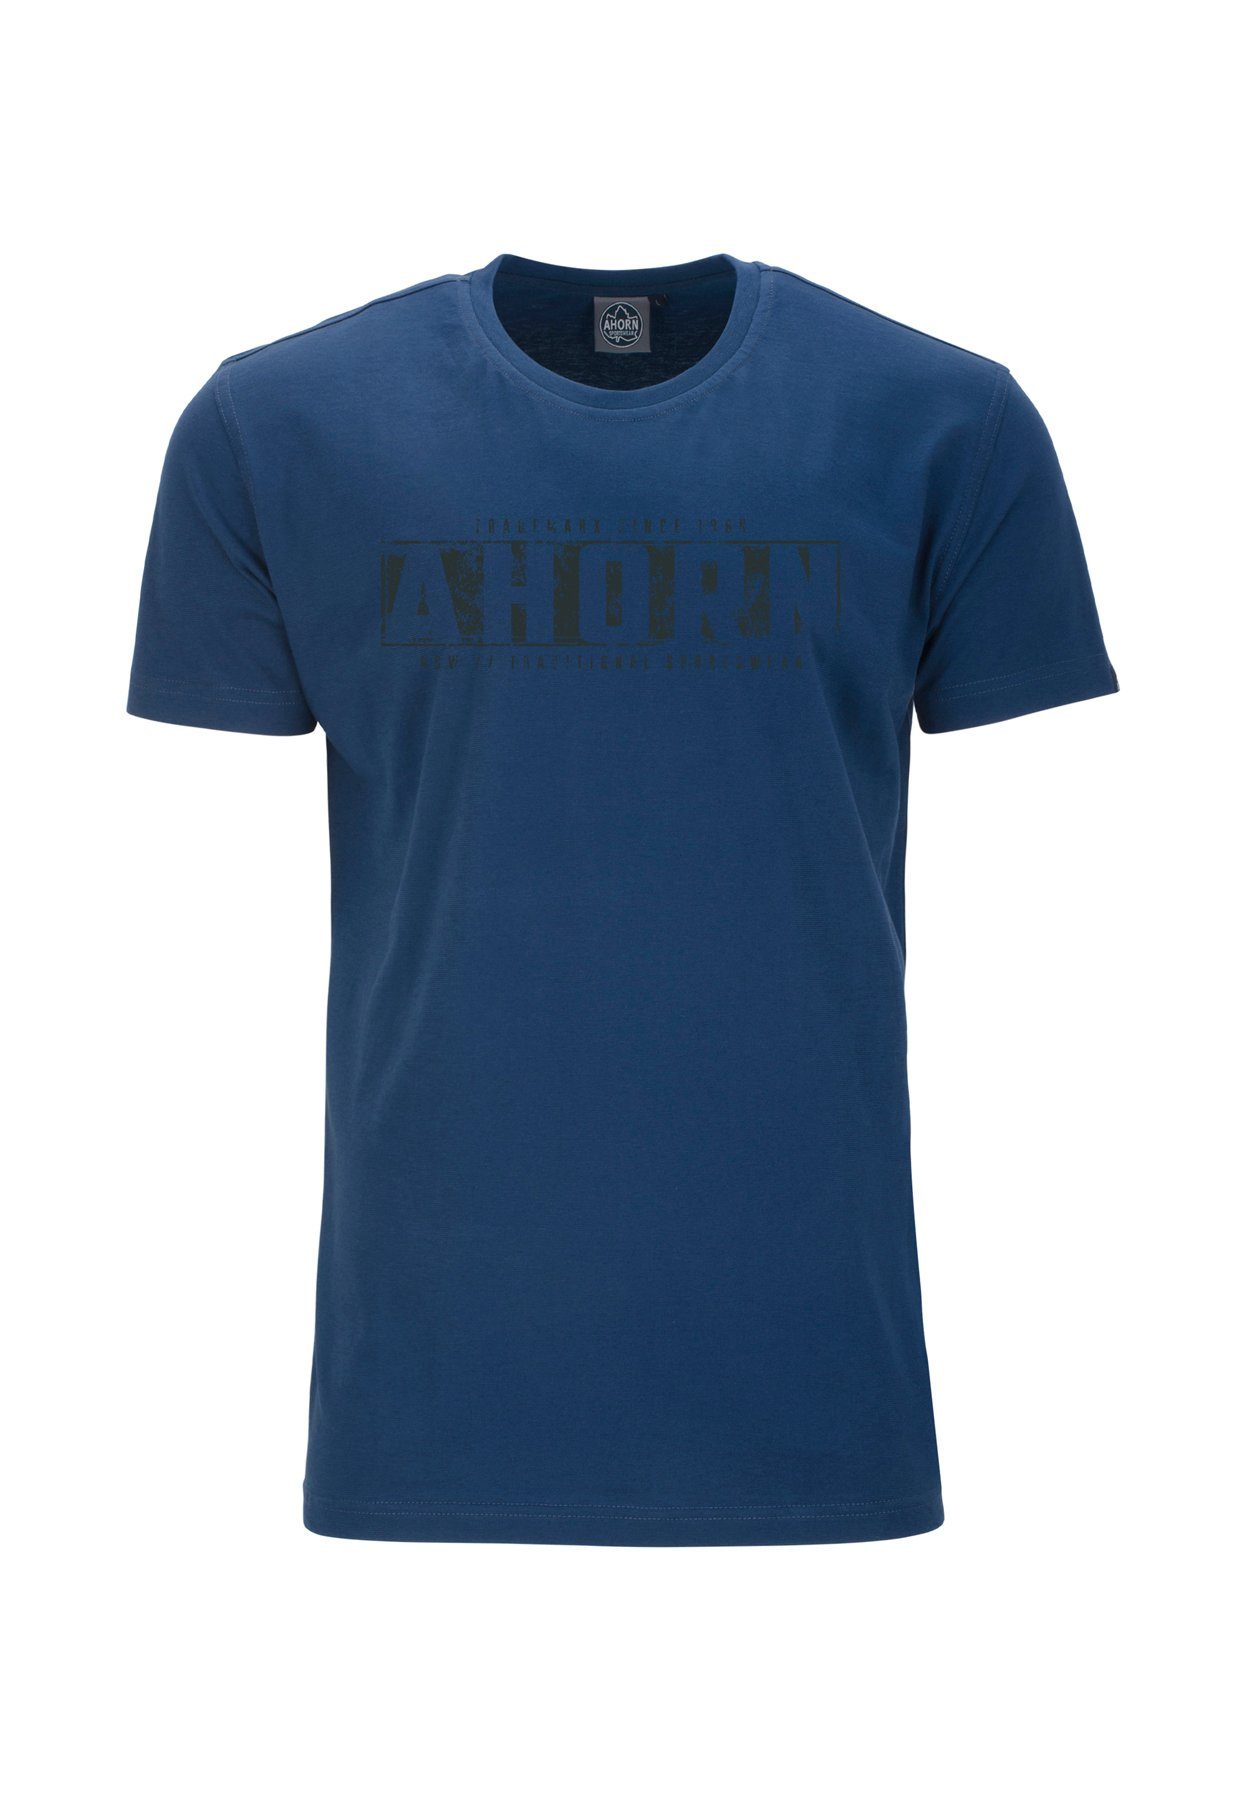 AHORN SPORTSWEAR mit grey T-Shirt TRADITIONAL_vulcan modischem blau Frontprint